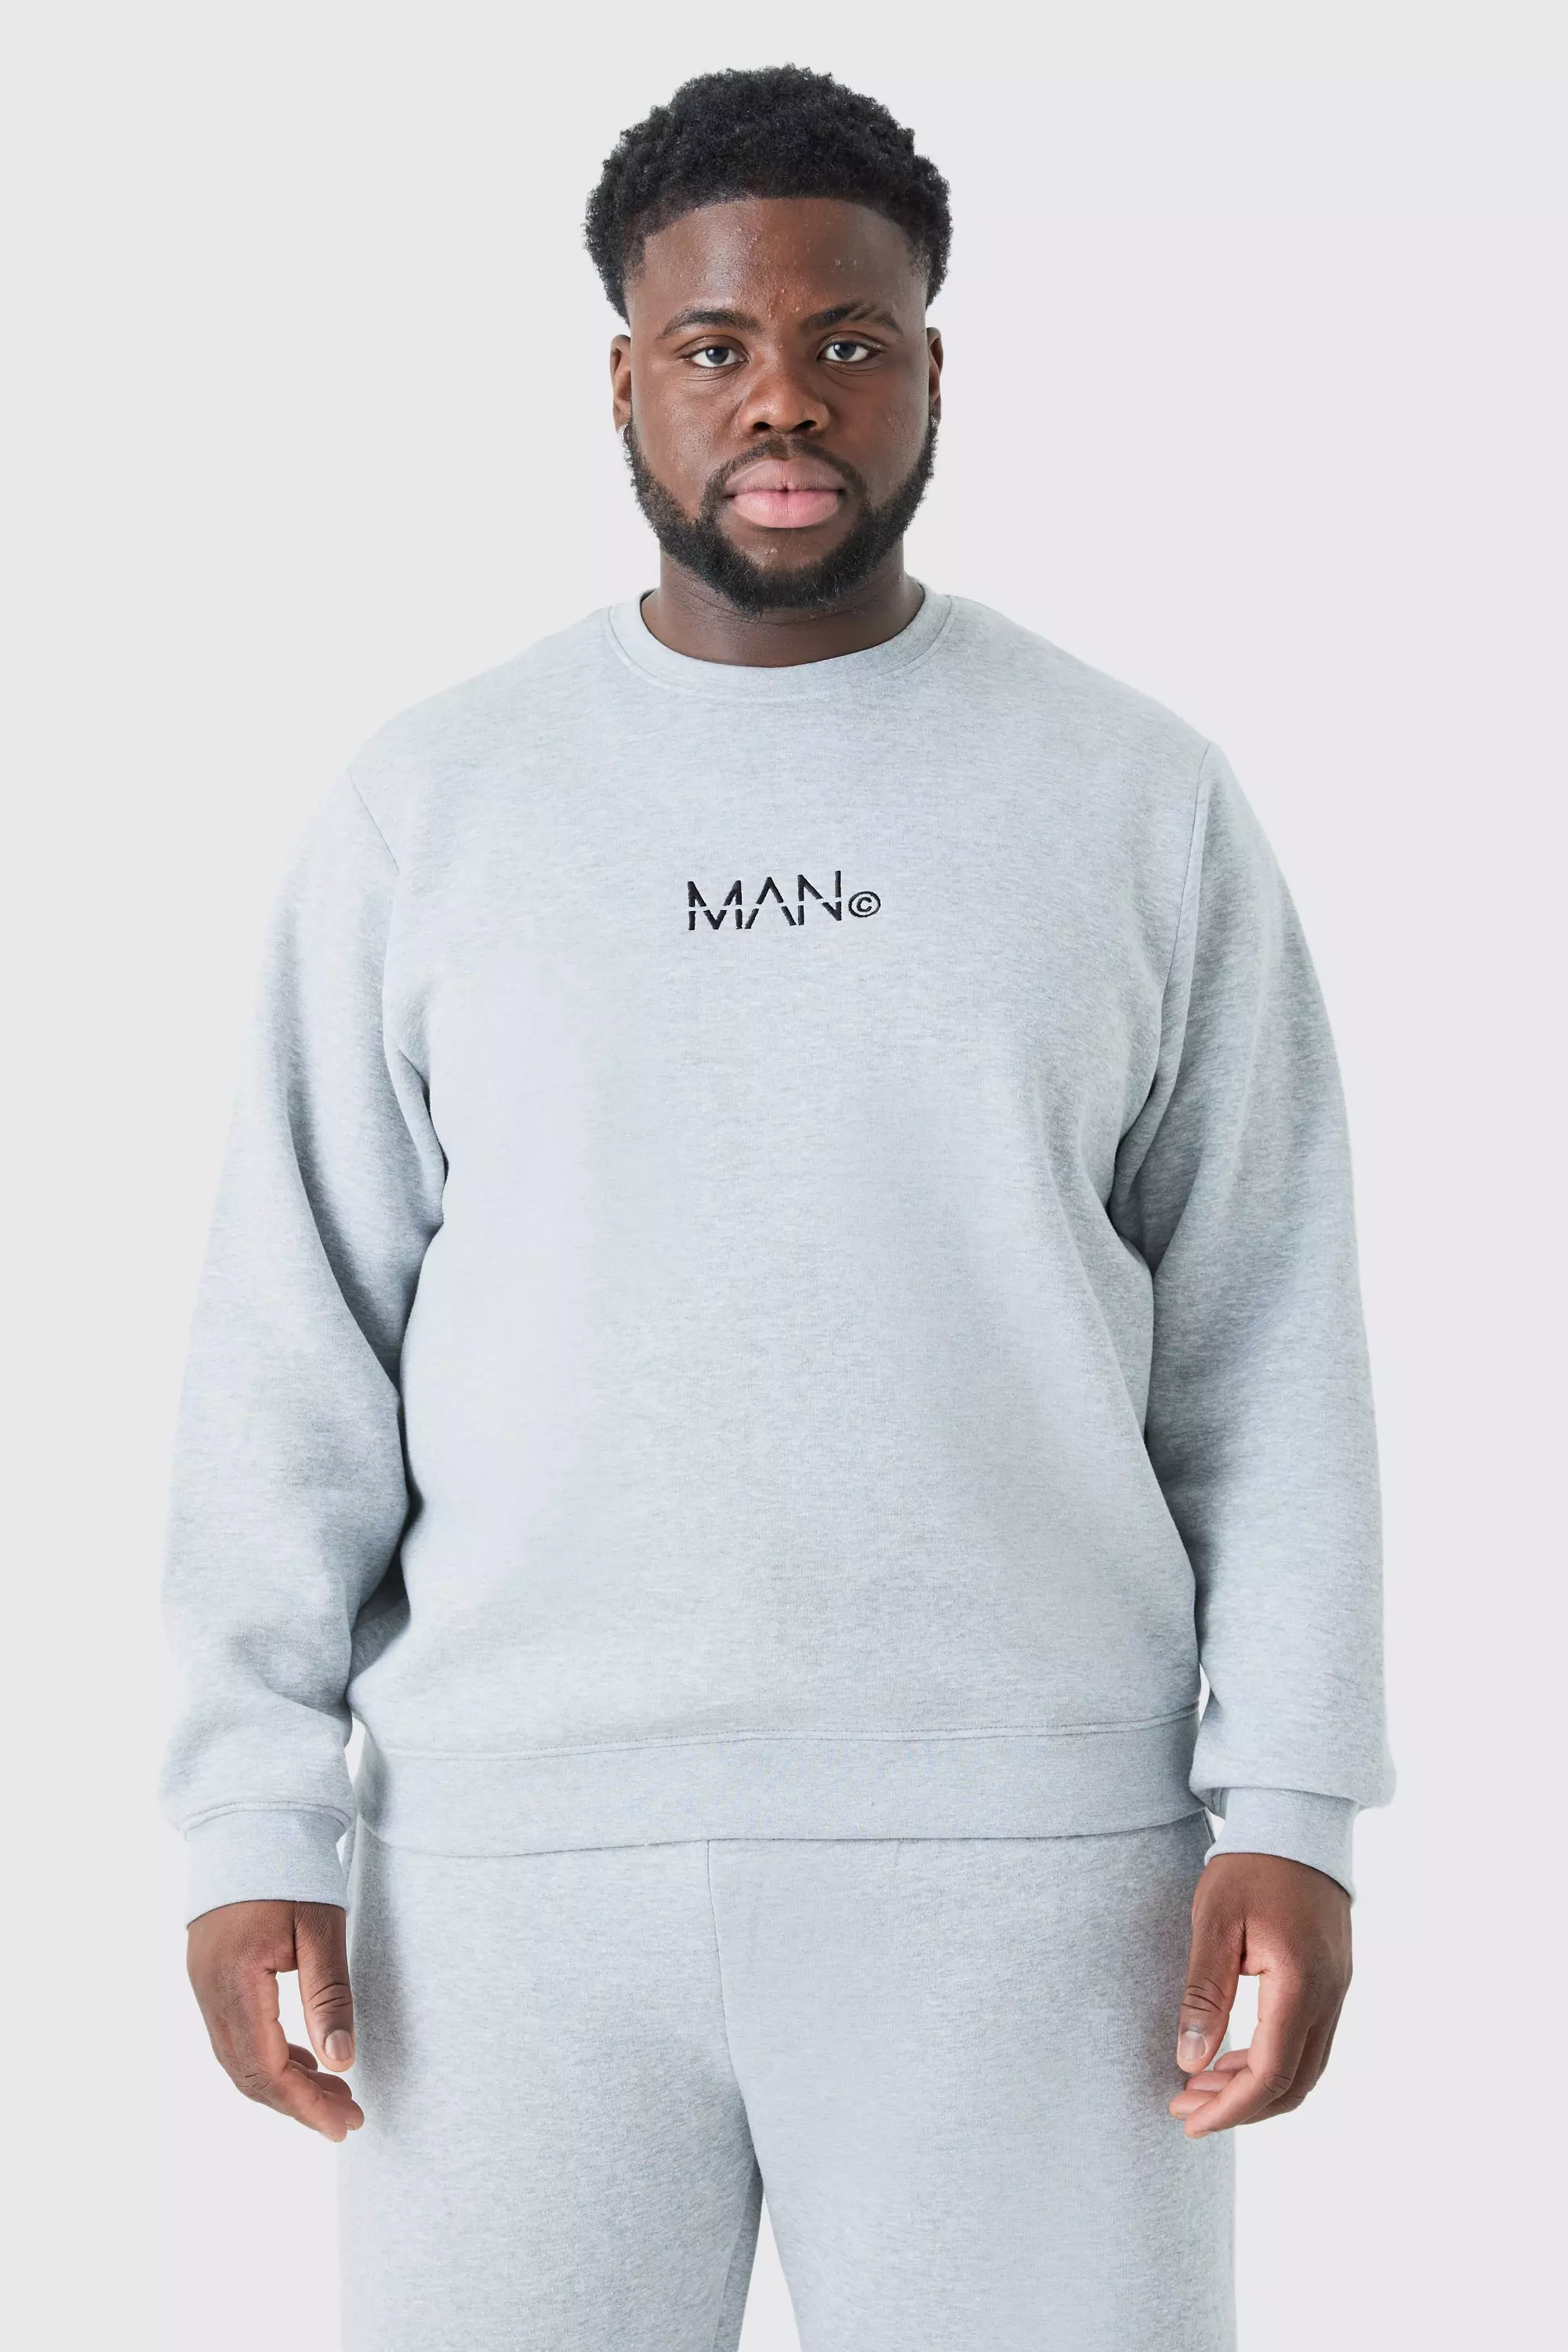 Plus Man Dash Crew Neck Sweatshirt In Grey Marl Grey marl